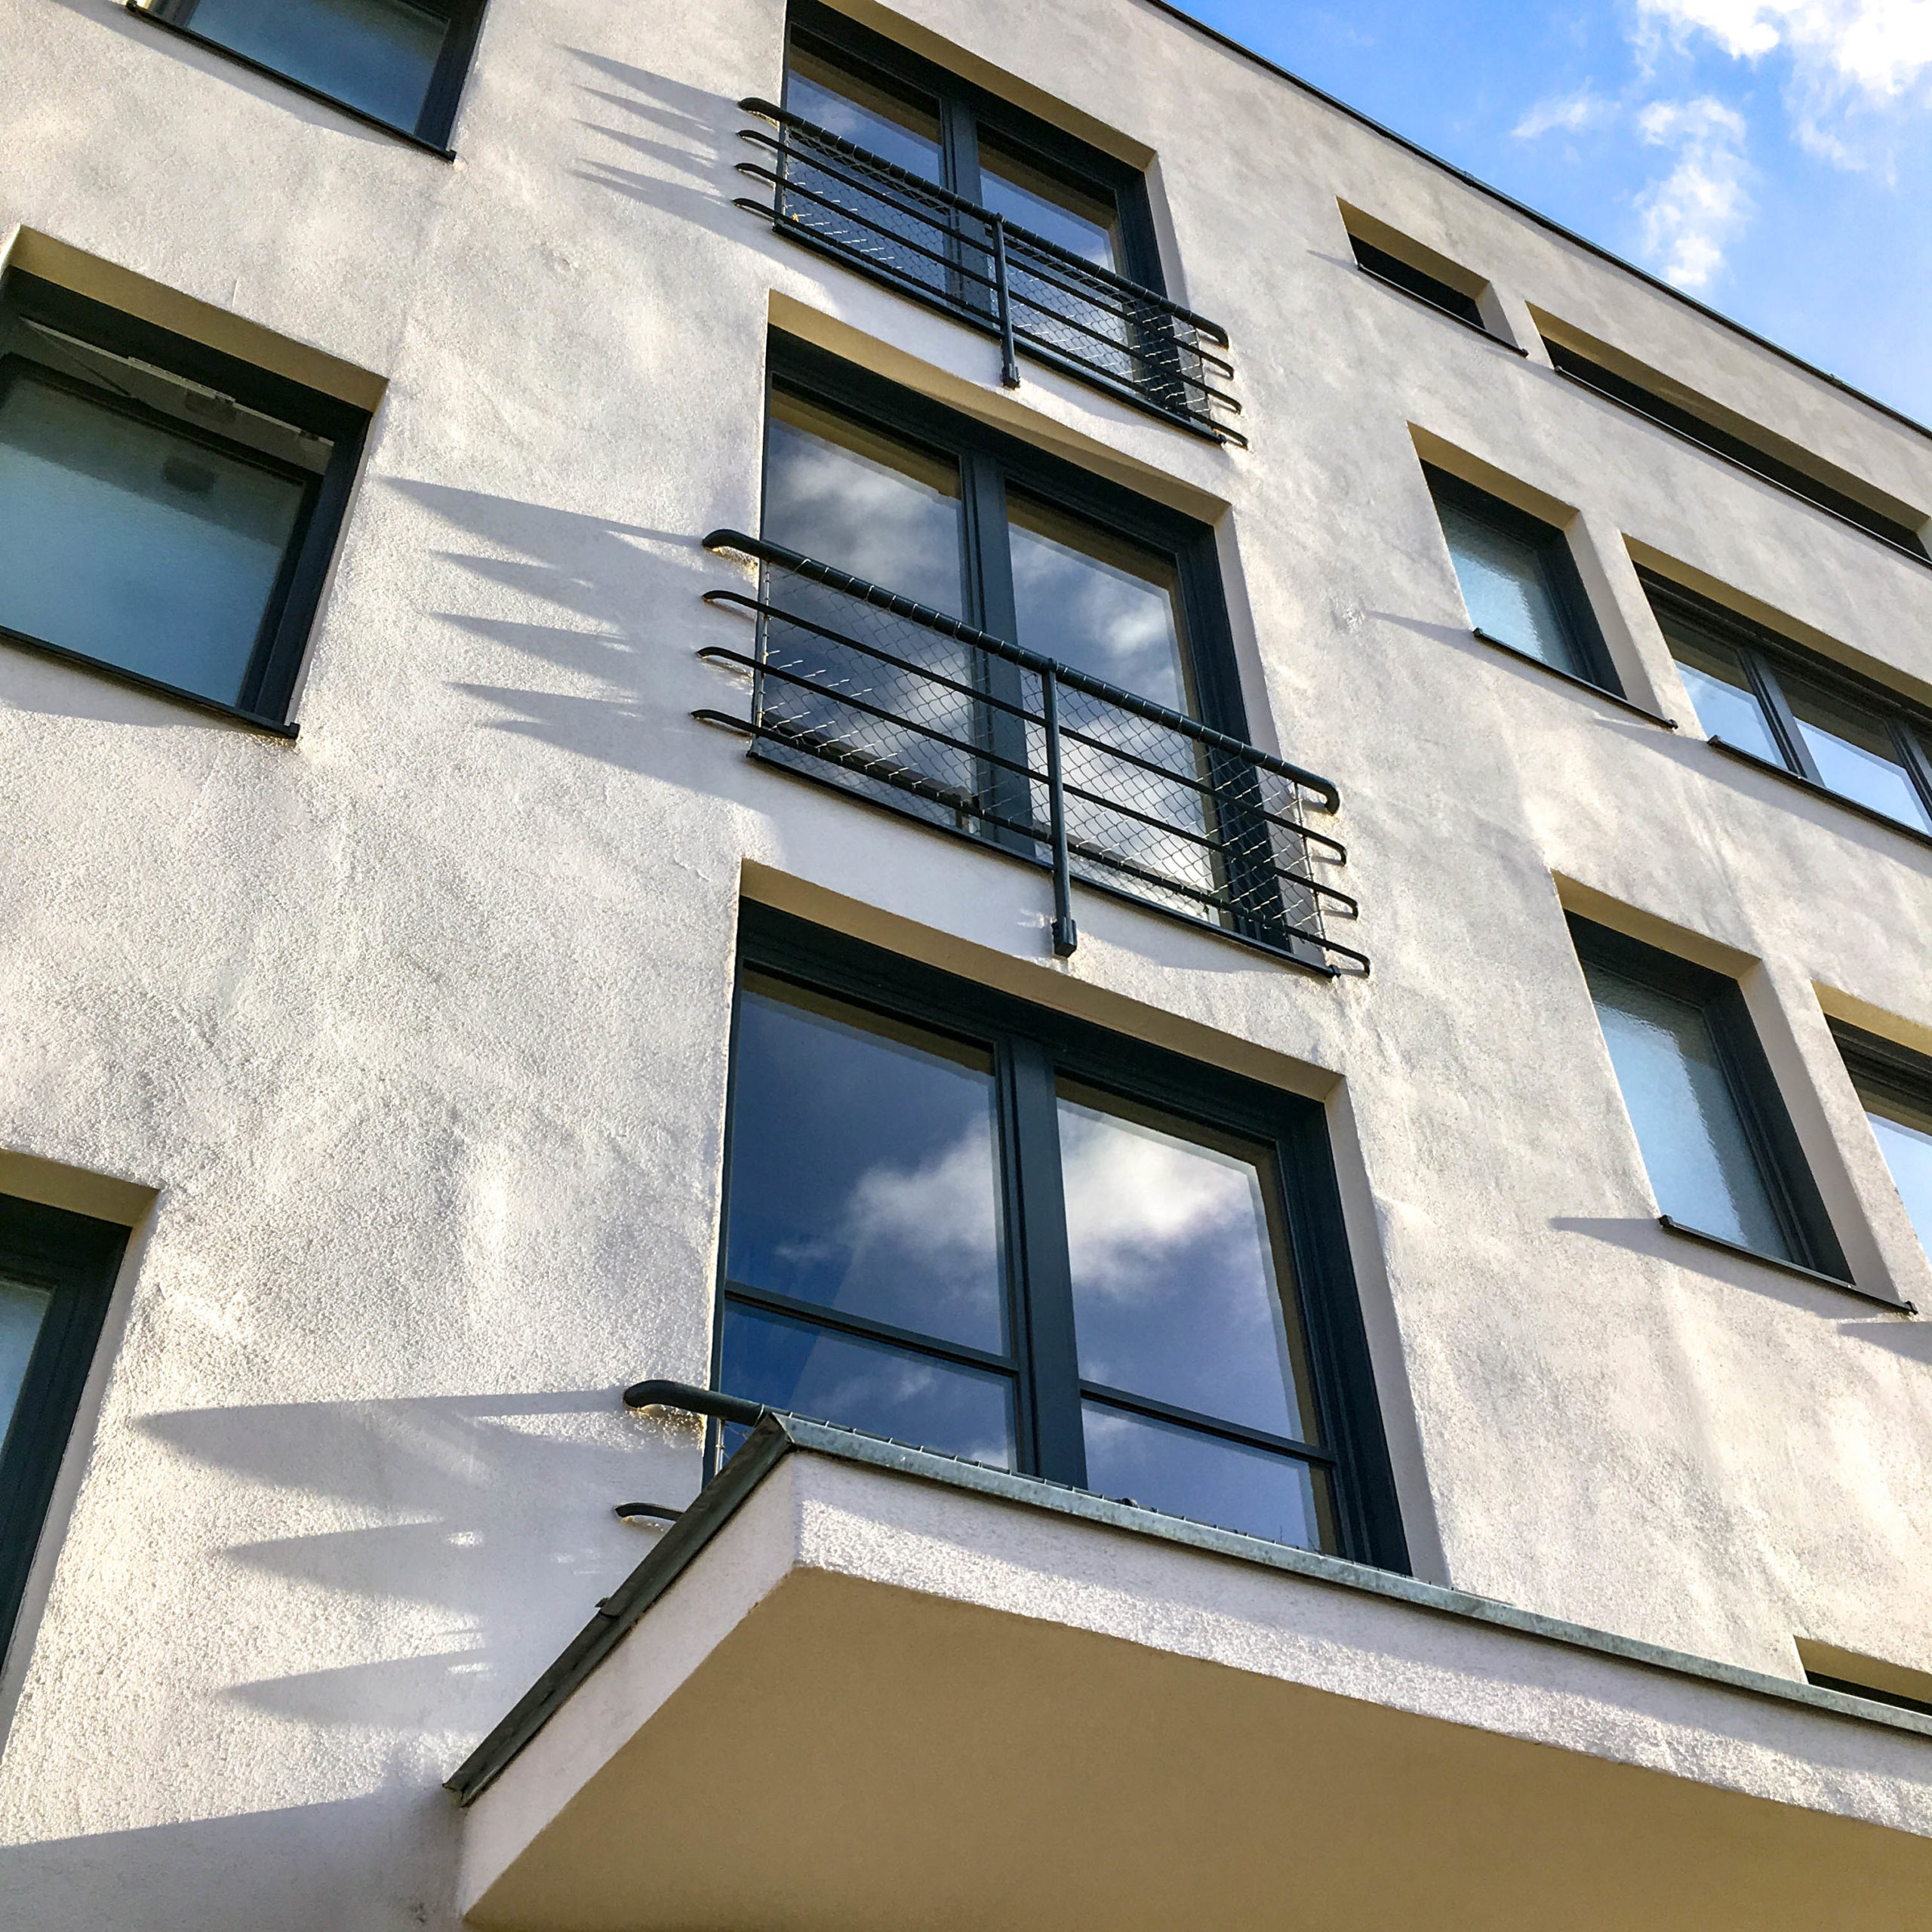 Residential complex, 1927. Architect: Ludwig Mies van der Rohe. Photo: Daniela Christmann